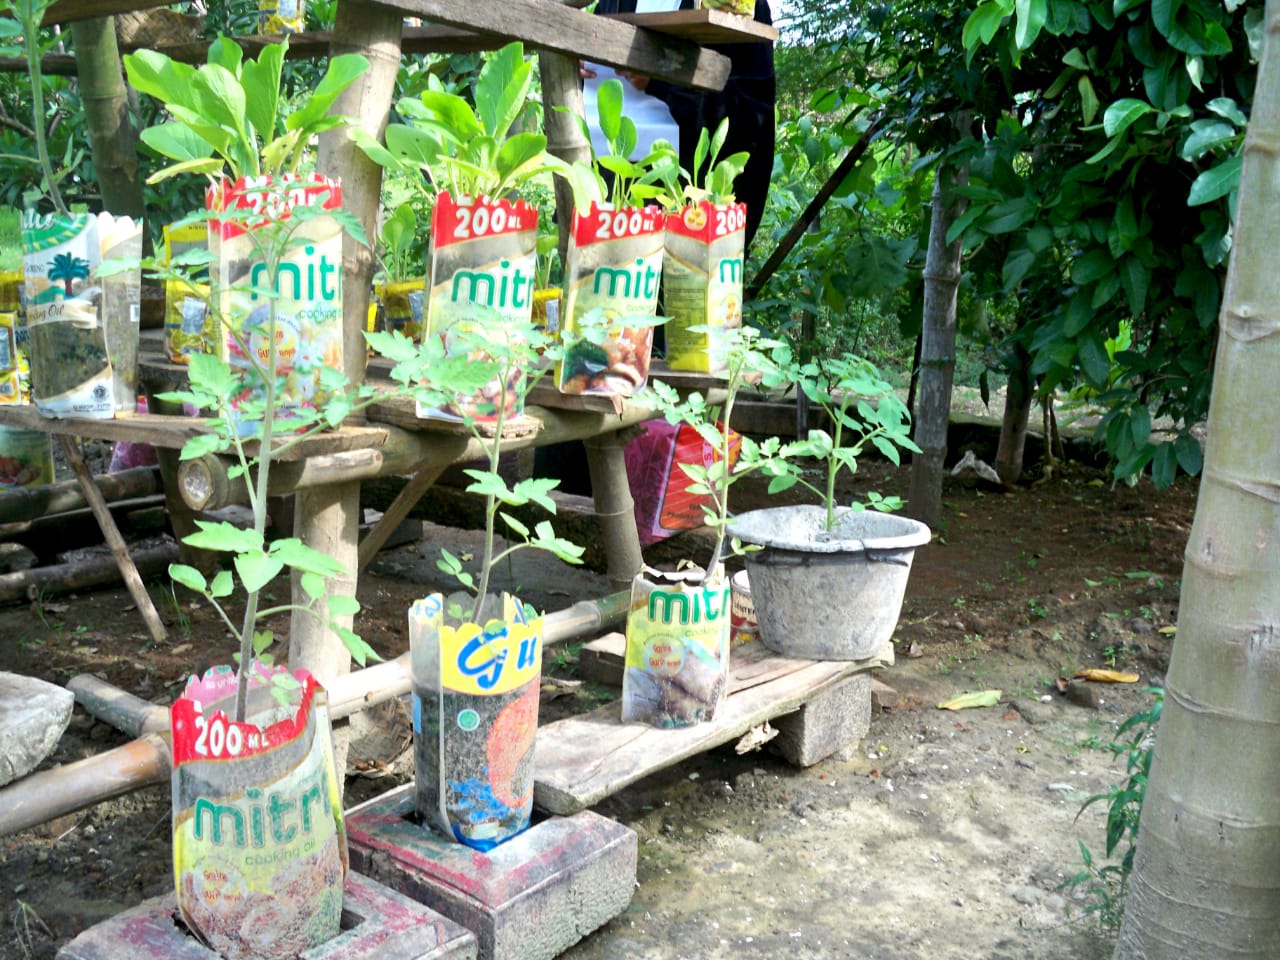 Bola plastik yang sudah rusak dimanfaatkan untuk pot tanaman sayur di Desa Babalan, Kec. Gabus, Pati. Warga desa ini memanfaatkan barang bekas yang sudah menjadi sampah untuk pot tanaman sayur di pekarangan.